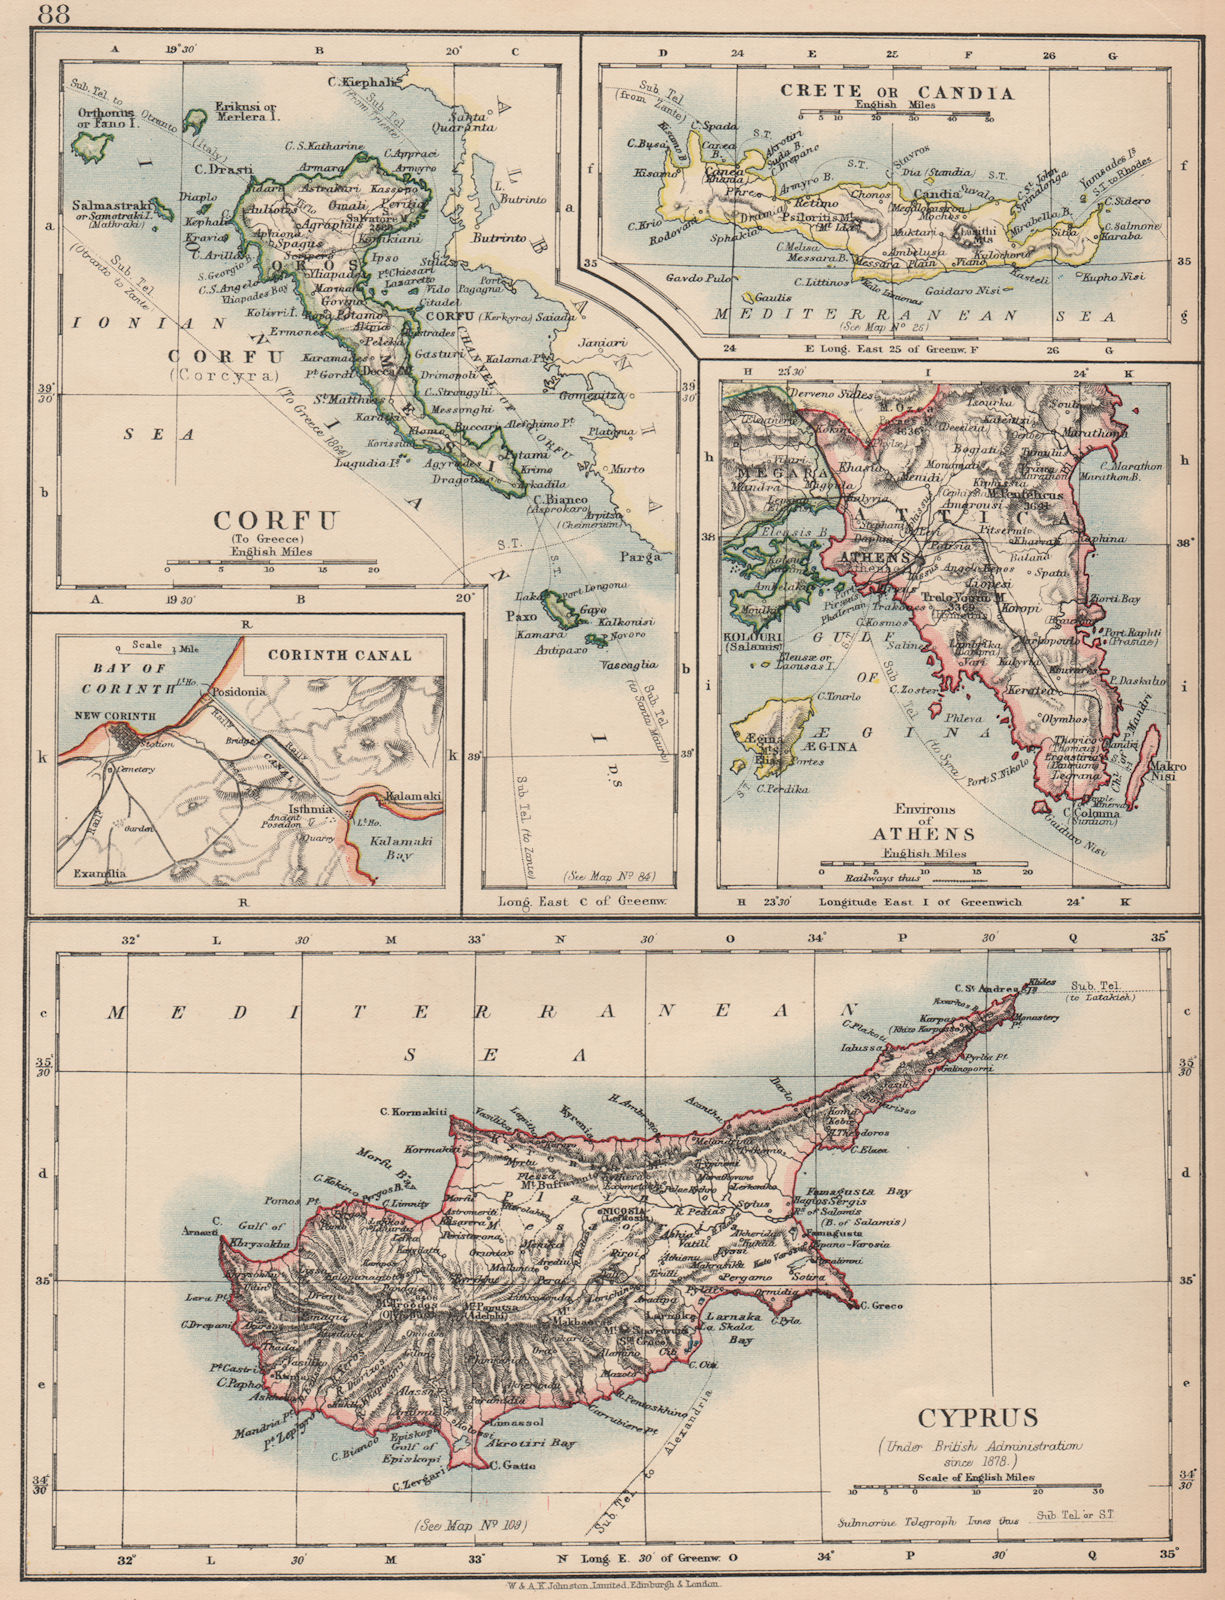 GREECE & CYPRUS.Corfu Crete Candia(Crete)Athens Corinth Canal.JOHNSTON 1906 map